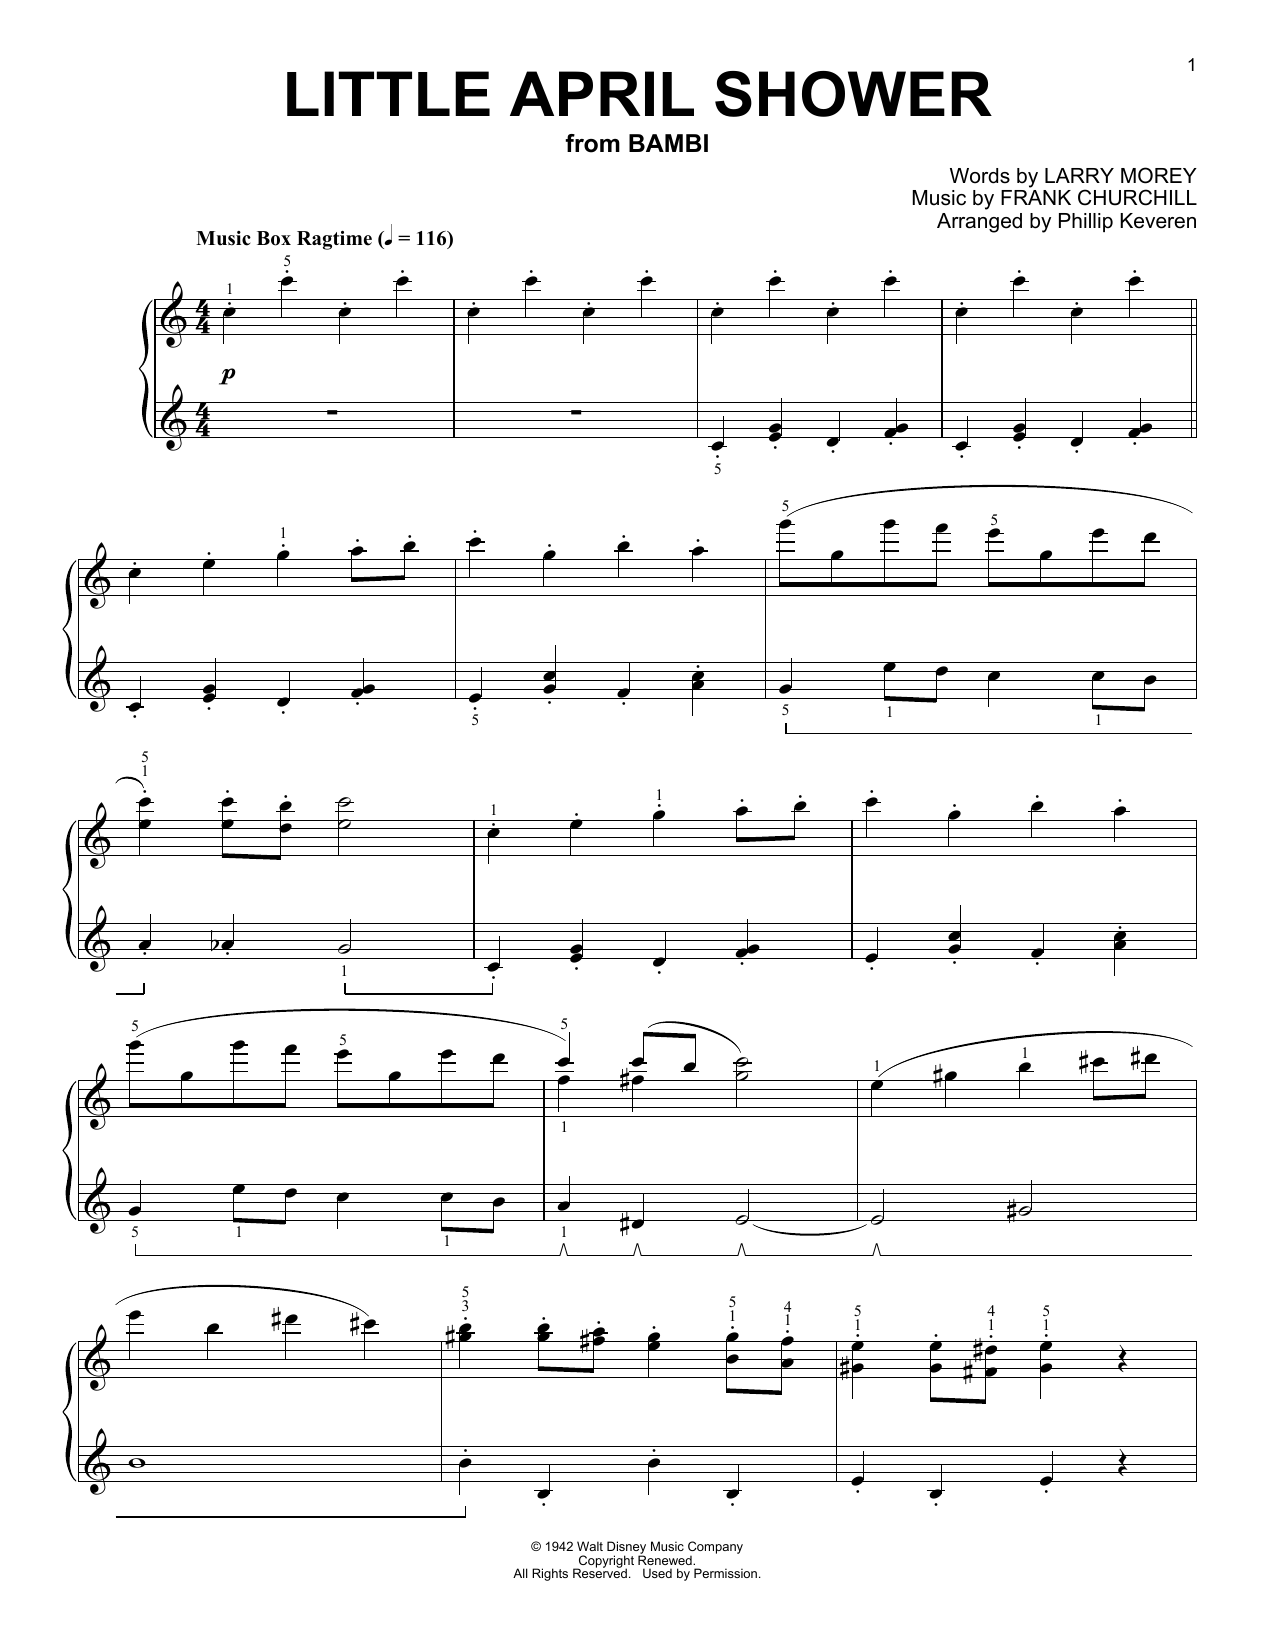 Frank Churchill Little April Shower [Ragtime version] (arr. Phillip Keveren) Sheet Music Notes & Chords for Piano - Download or Print PDF